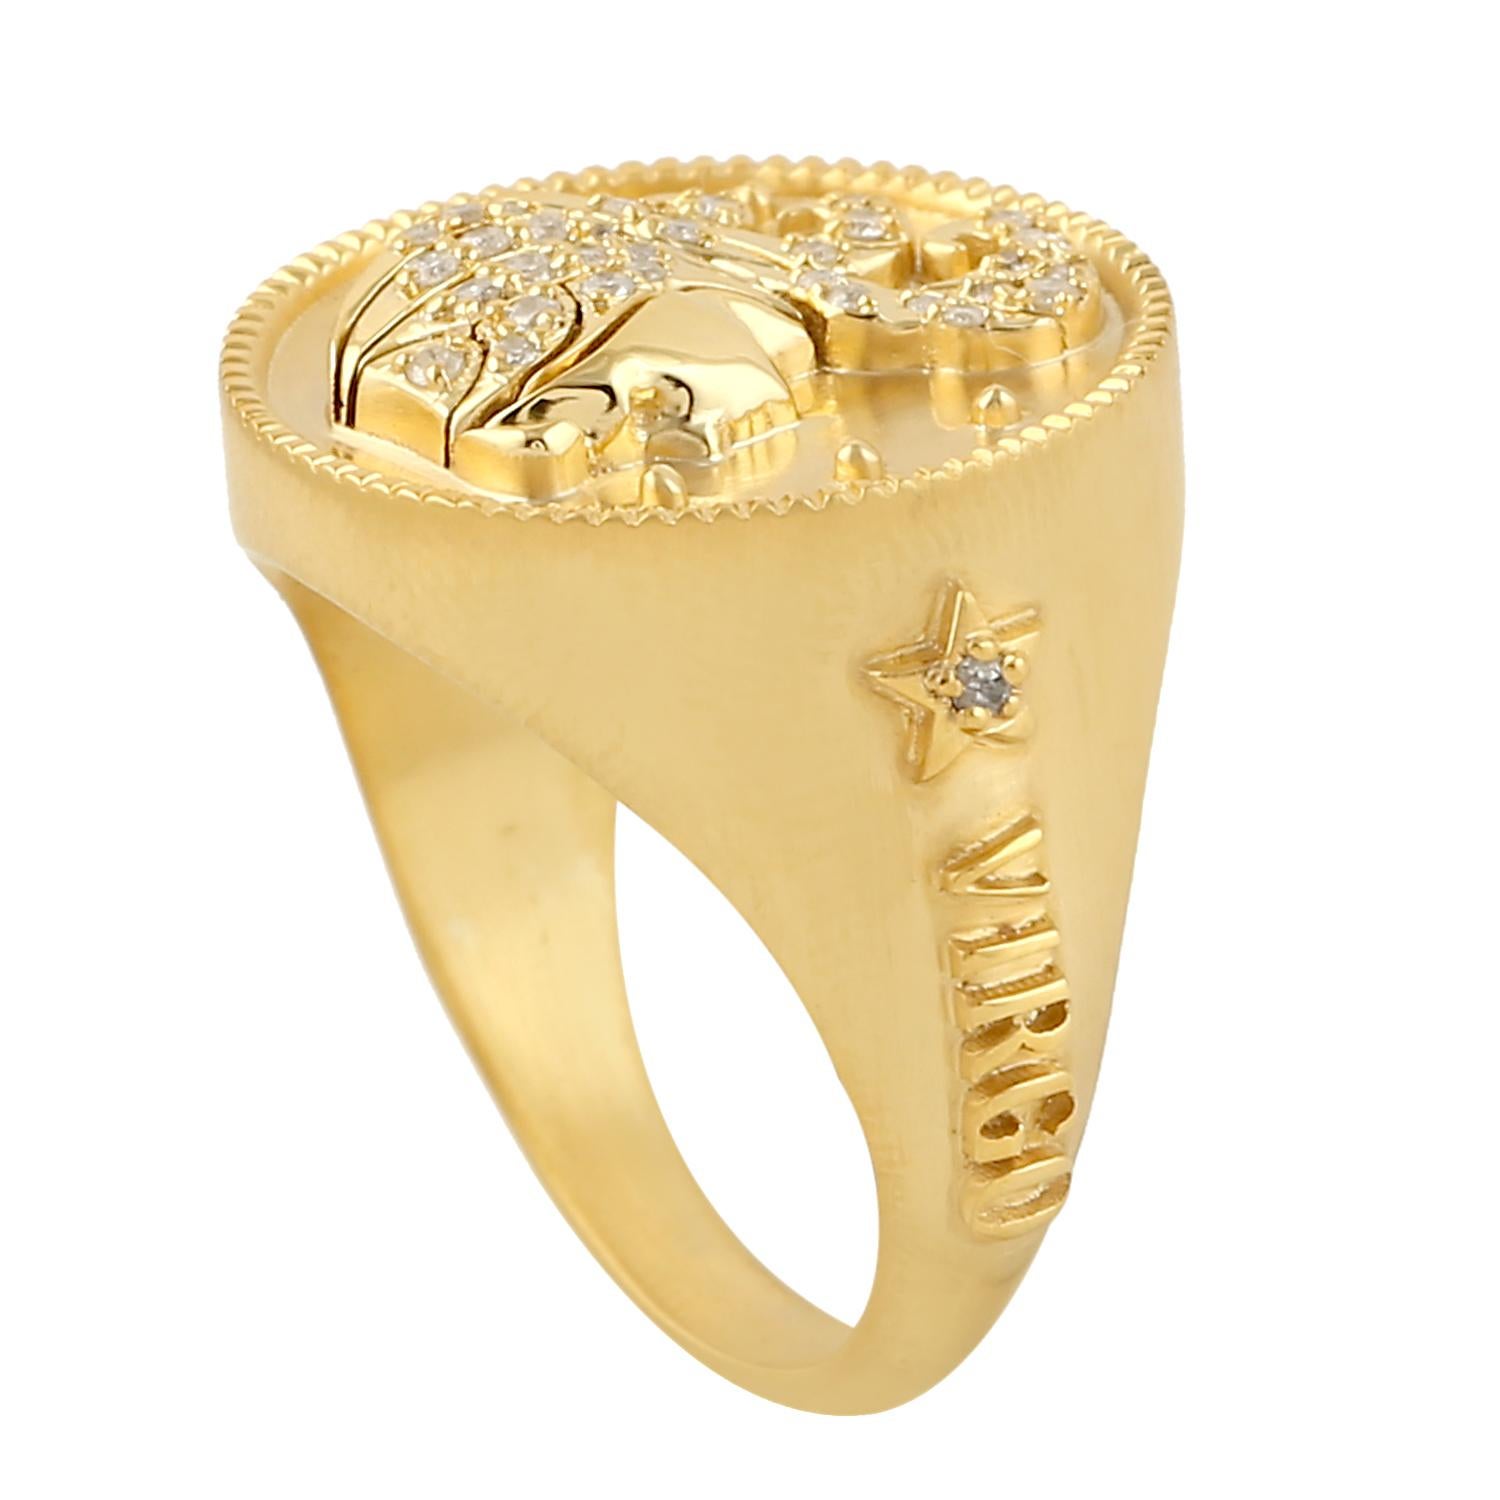 Women's 14k Golden Ring With Pave Diamong Setting In Swirl Virgo Zodiac Sunsign For Sale